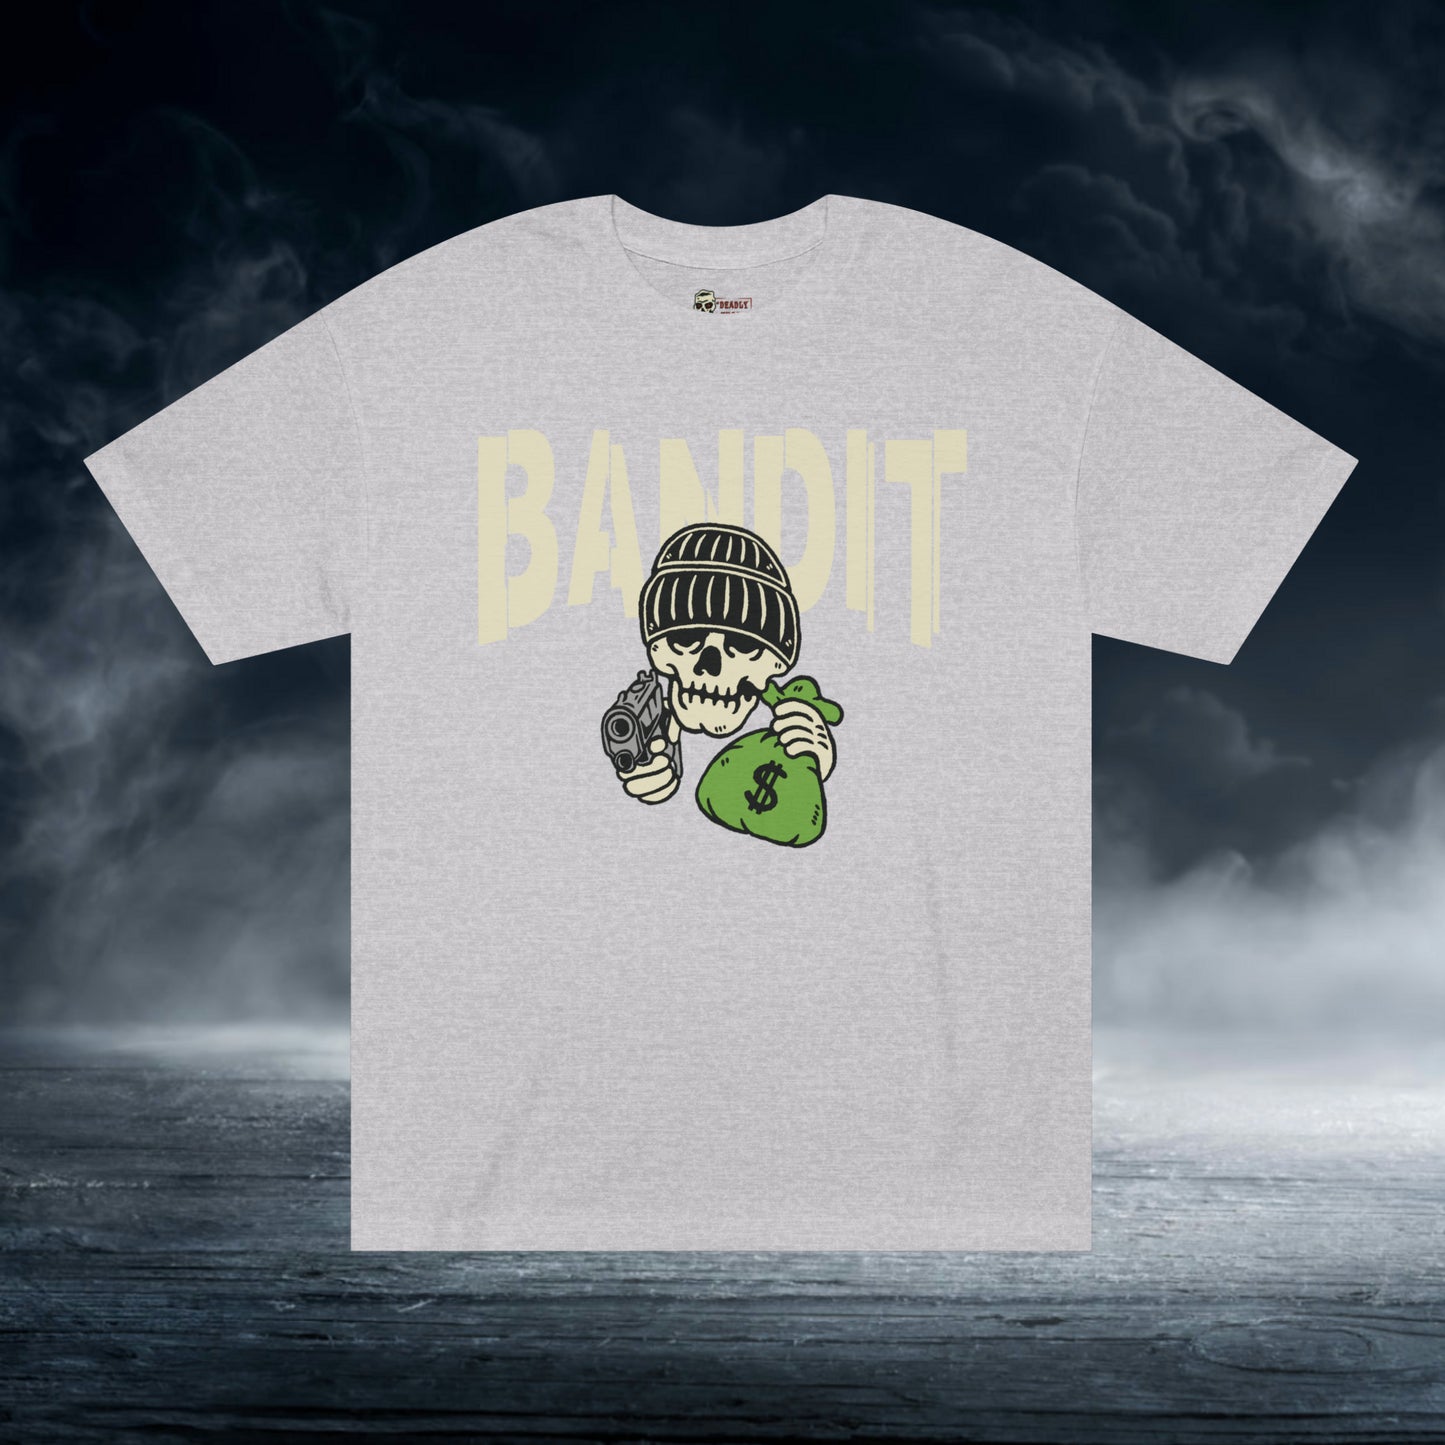 Bandit T-Shirt